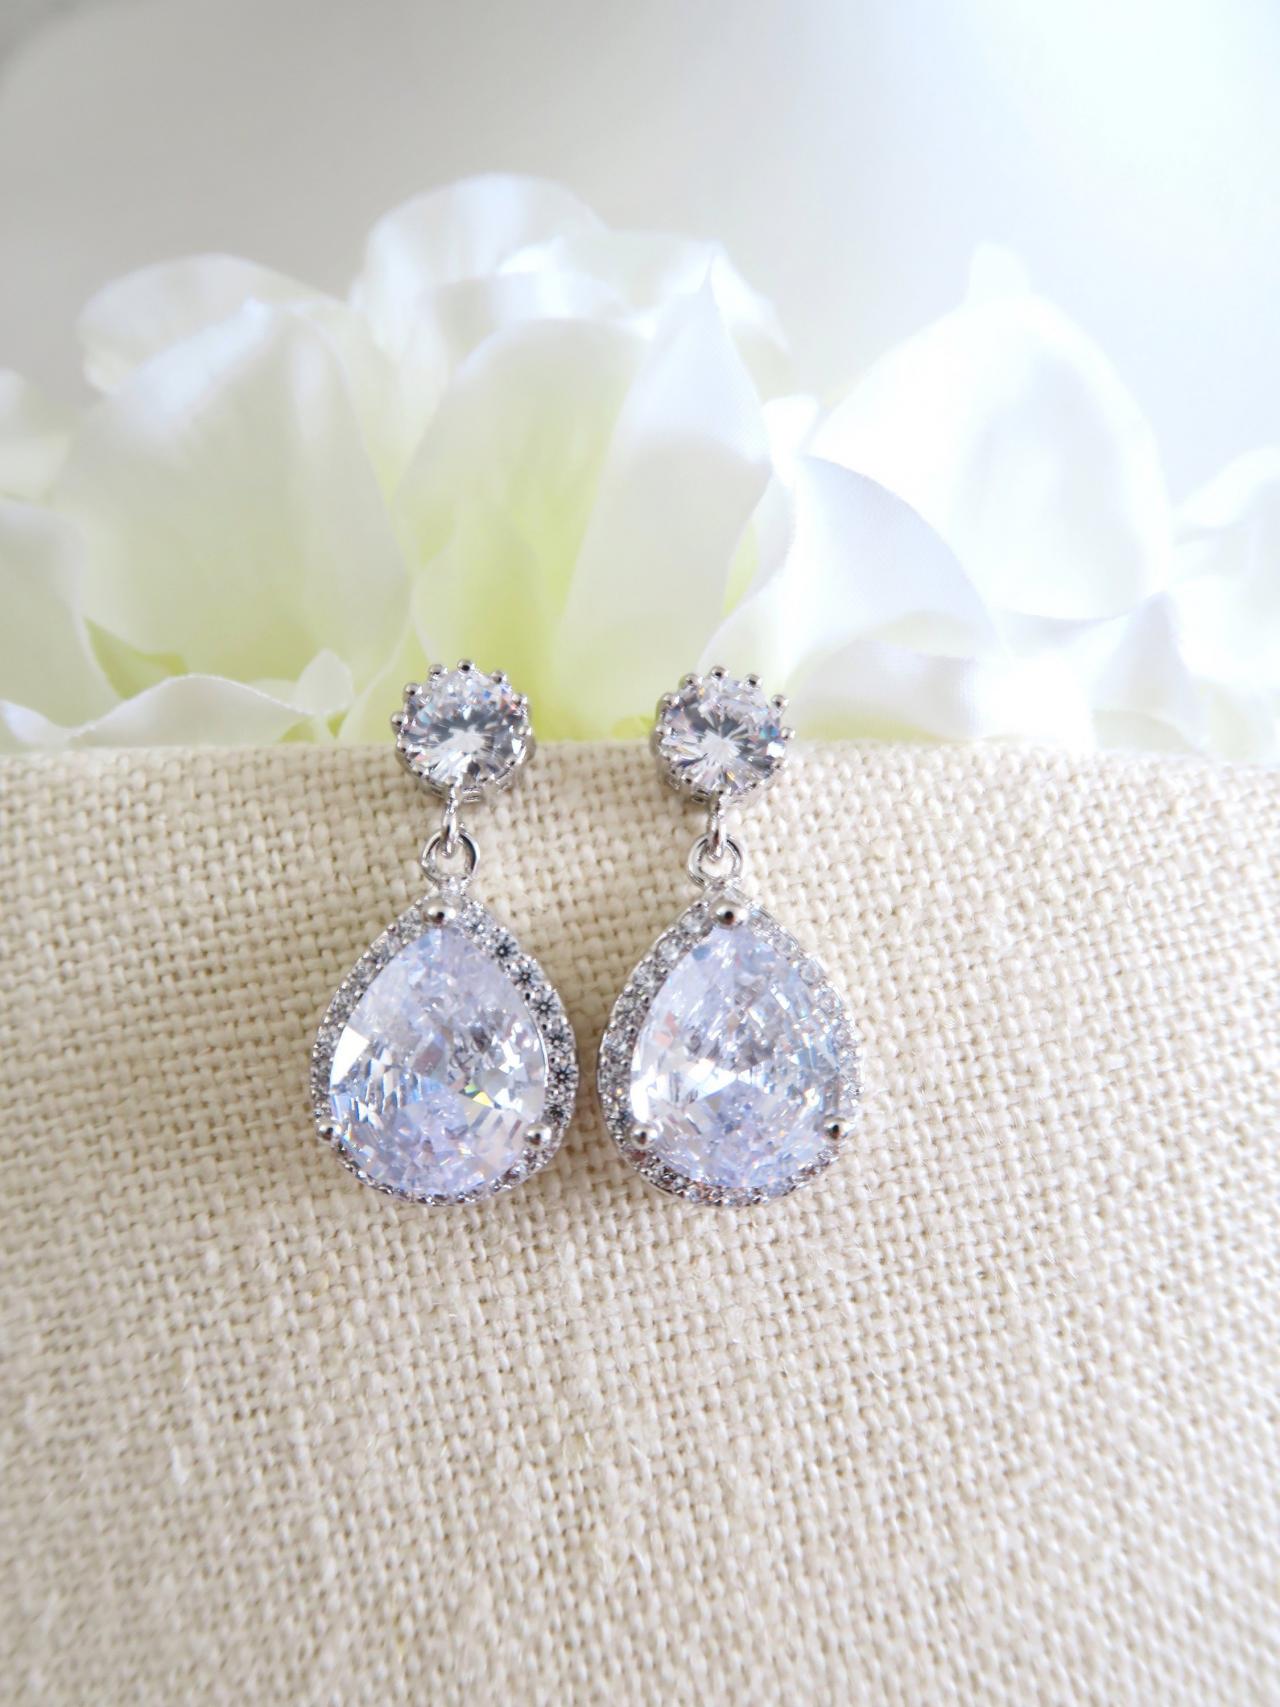 Bridal Crystal Earrings Large Lux Cubic Zirconia Teardrop Wedding Earrings Drop Dangle Bridesmaid Gift Birthday Gift (e033)